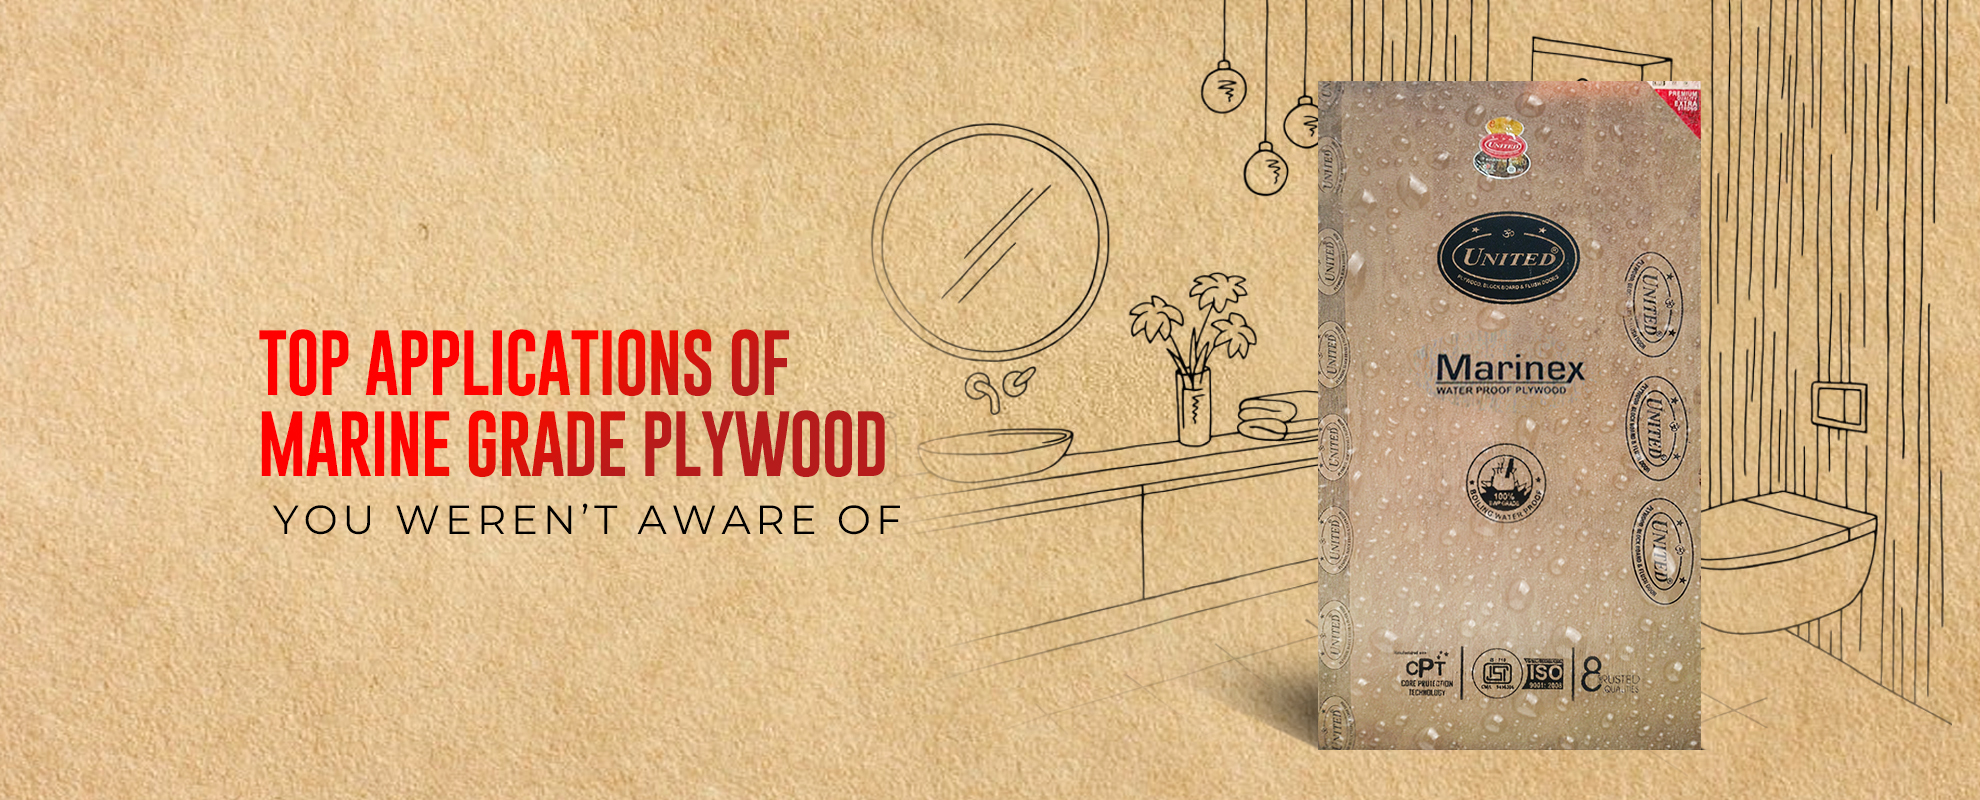 Best Shuttering Plywood in Haryana